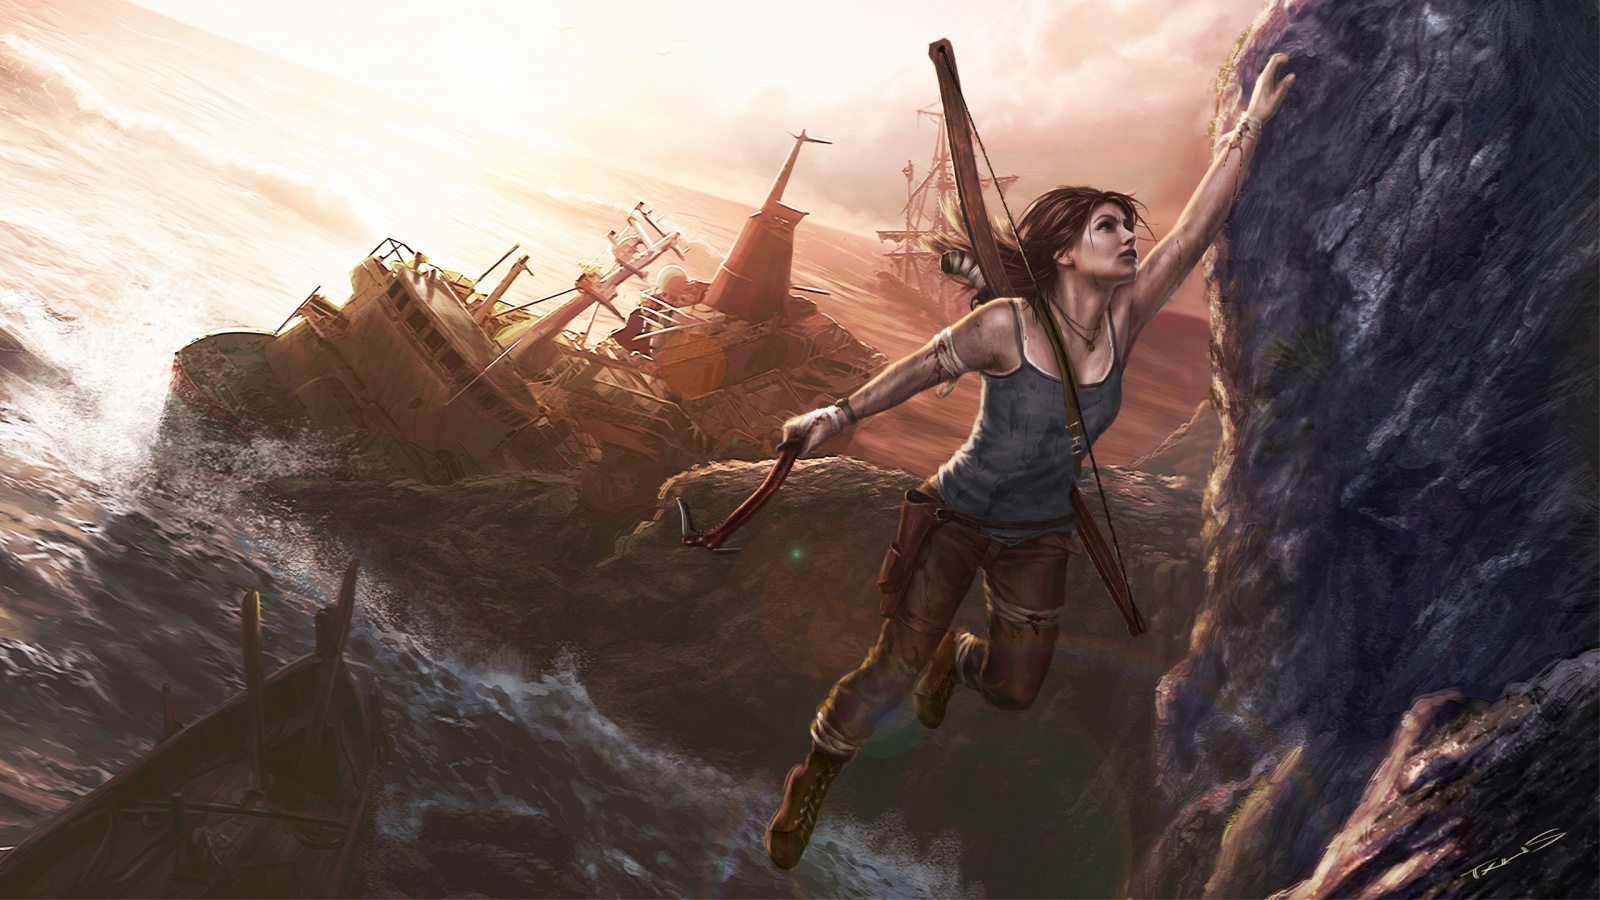 Best Tomb Raider (Lara Croft) wallpaper ID:437179 for High Resolution hd 1600x900 computer